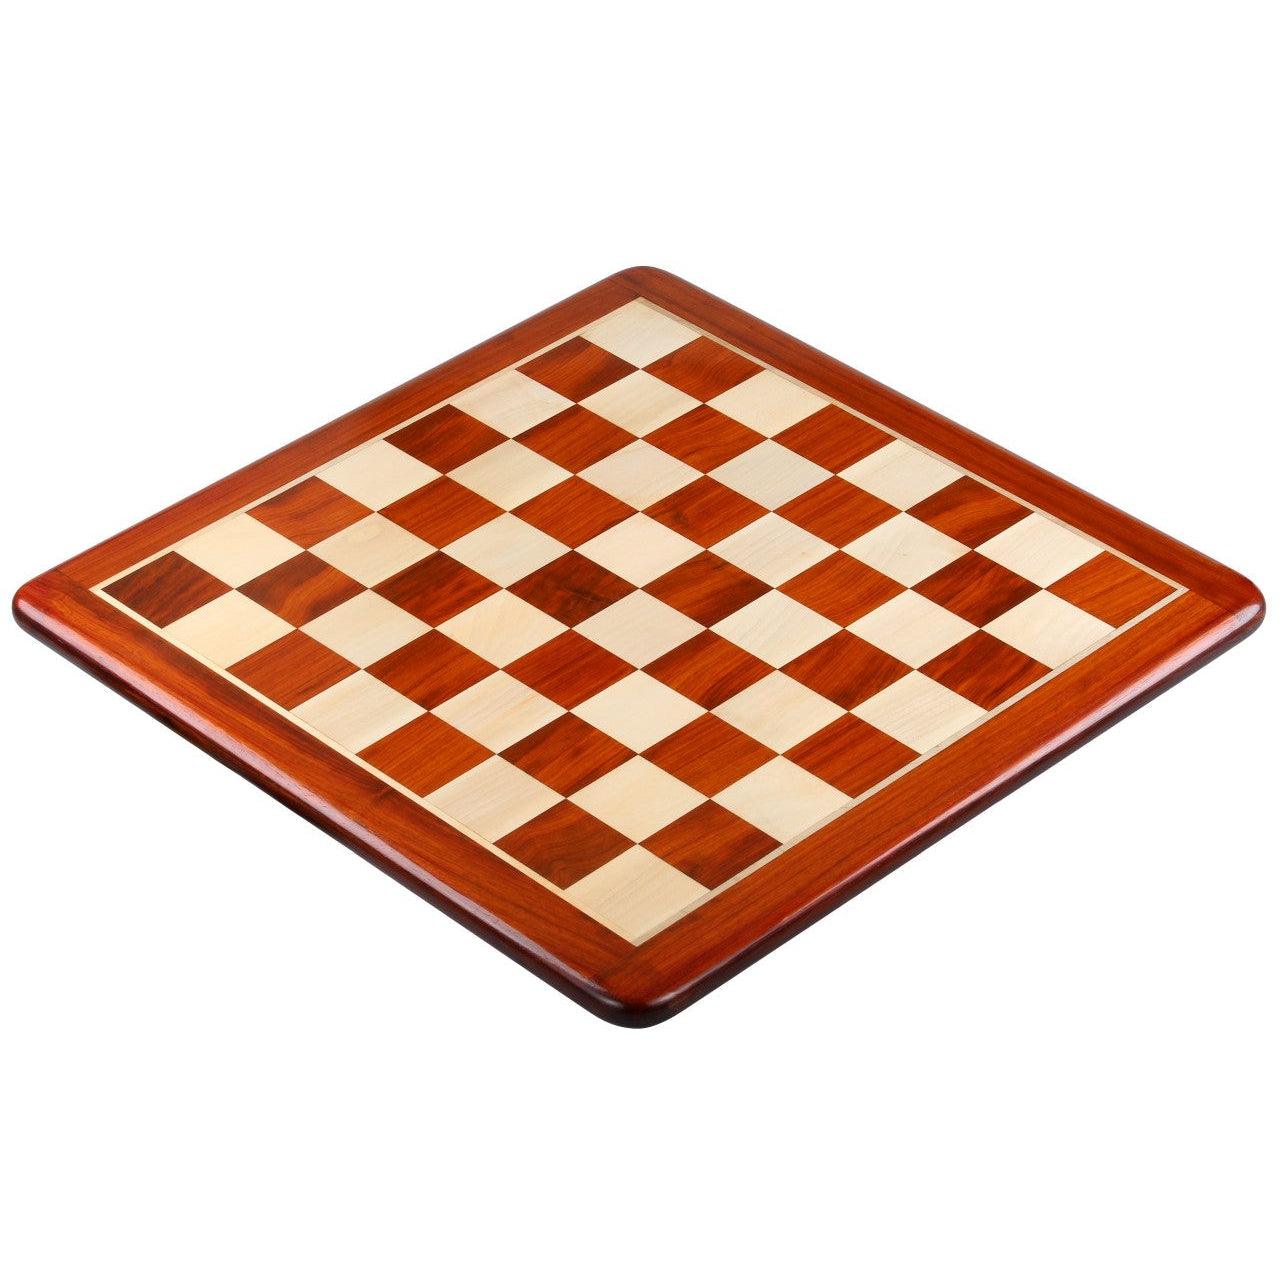 Chess board REDWOOD